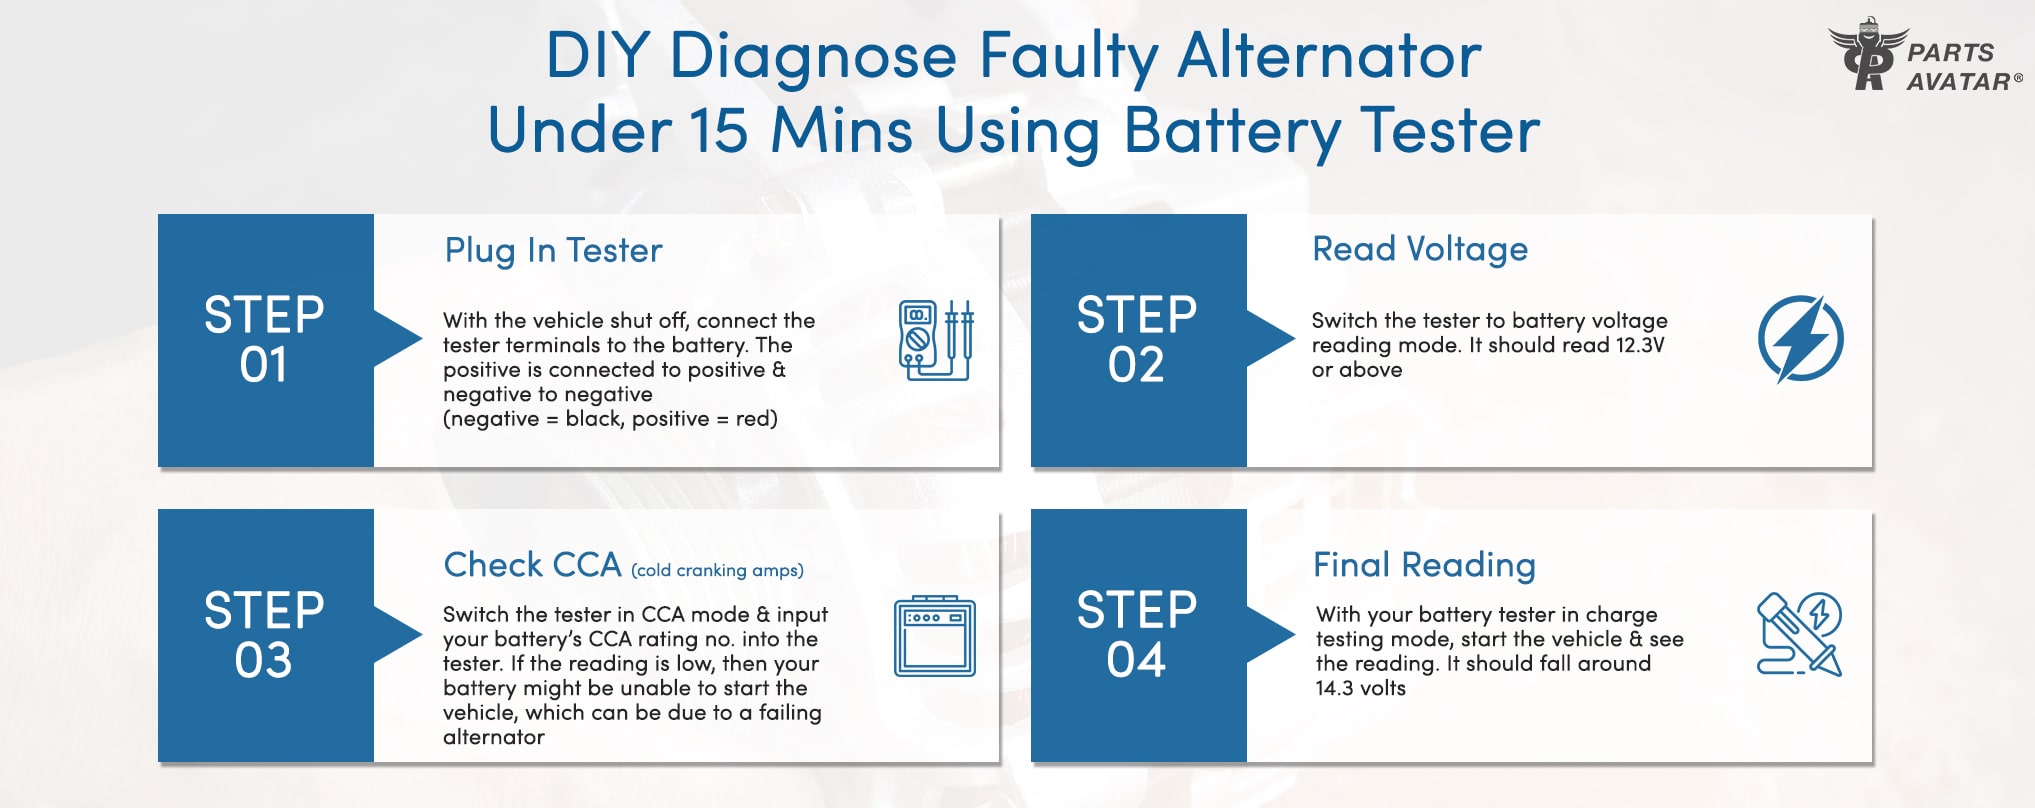 2. Using A Battery Tester  (Under 15 Mins)